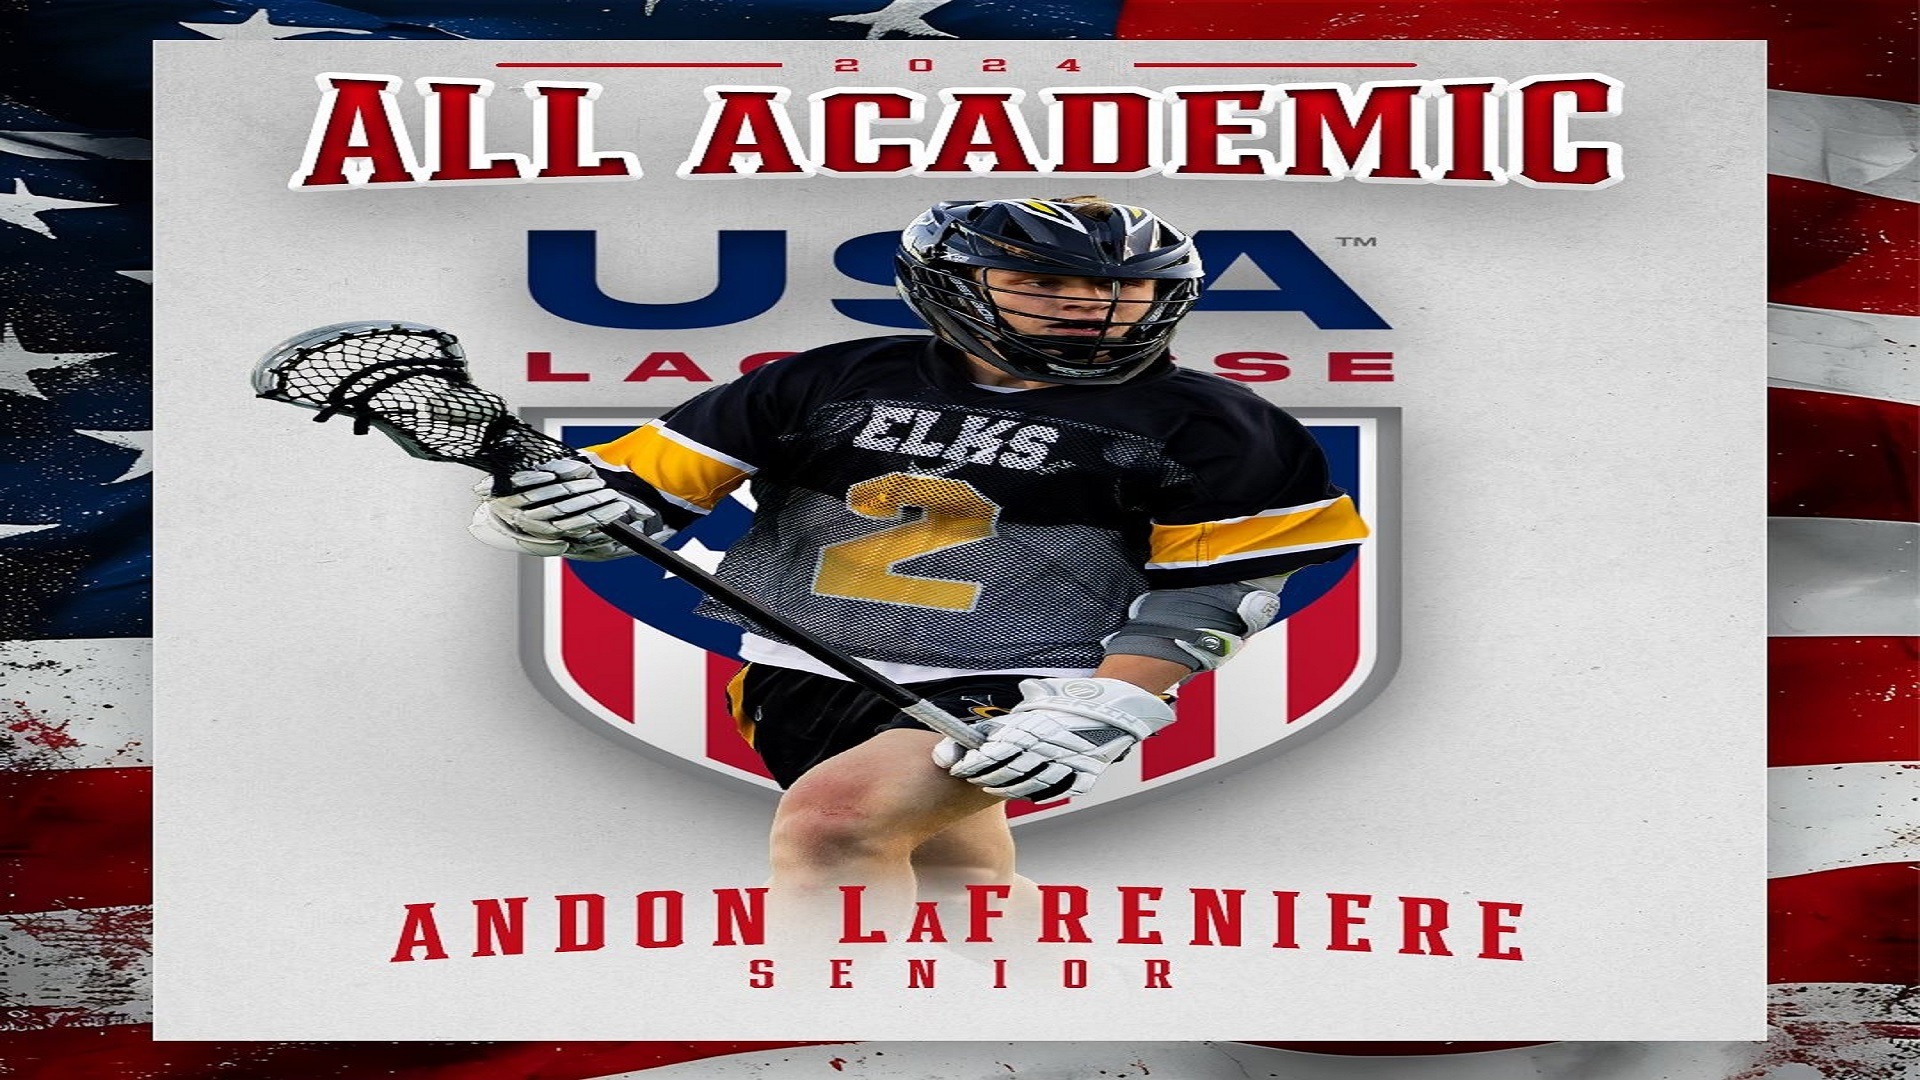 Slide 2 - Andon LaFreniere, Lacrosse, Academic All-American